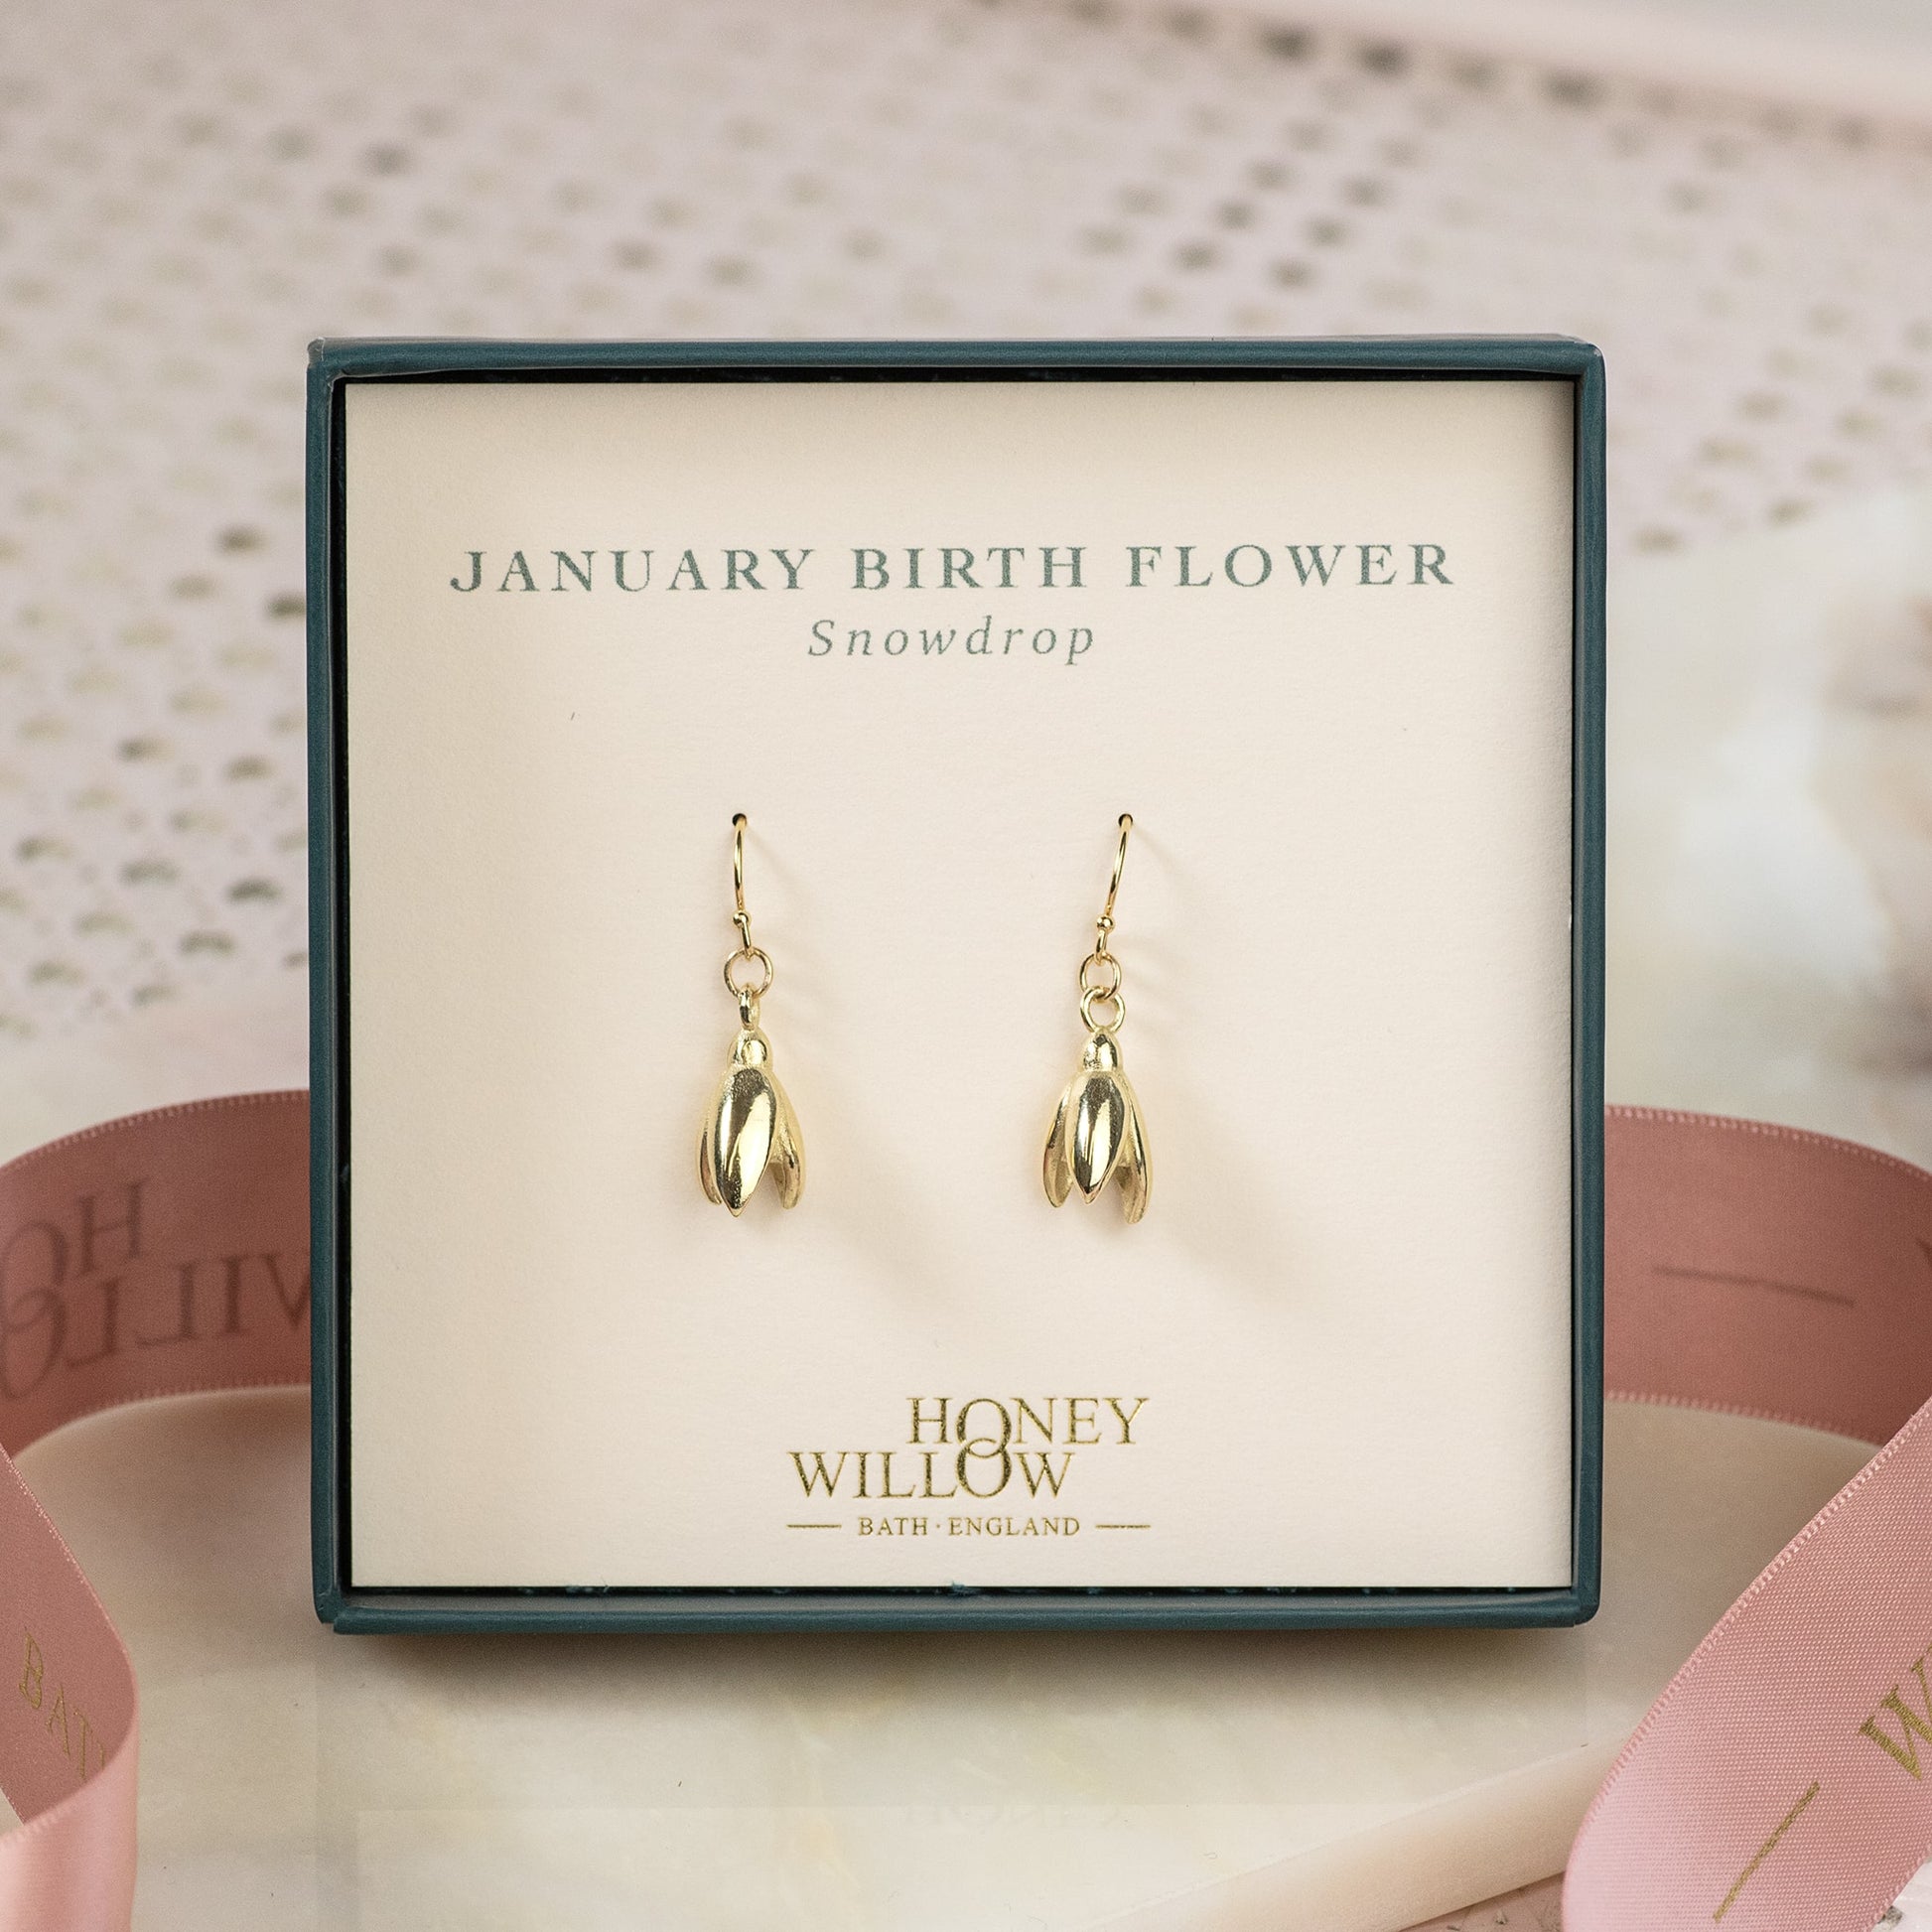 January Birth Flower Earrings - Snowdrop - 9kt Gold